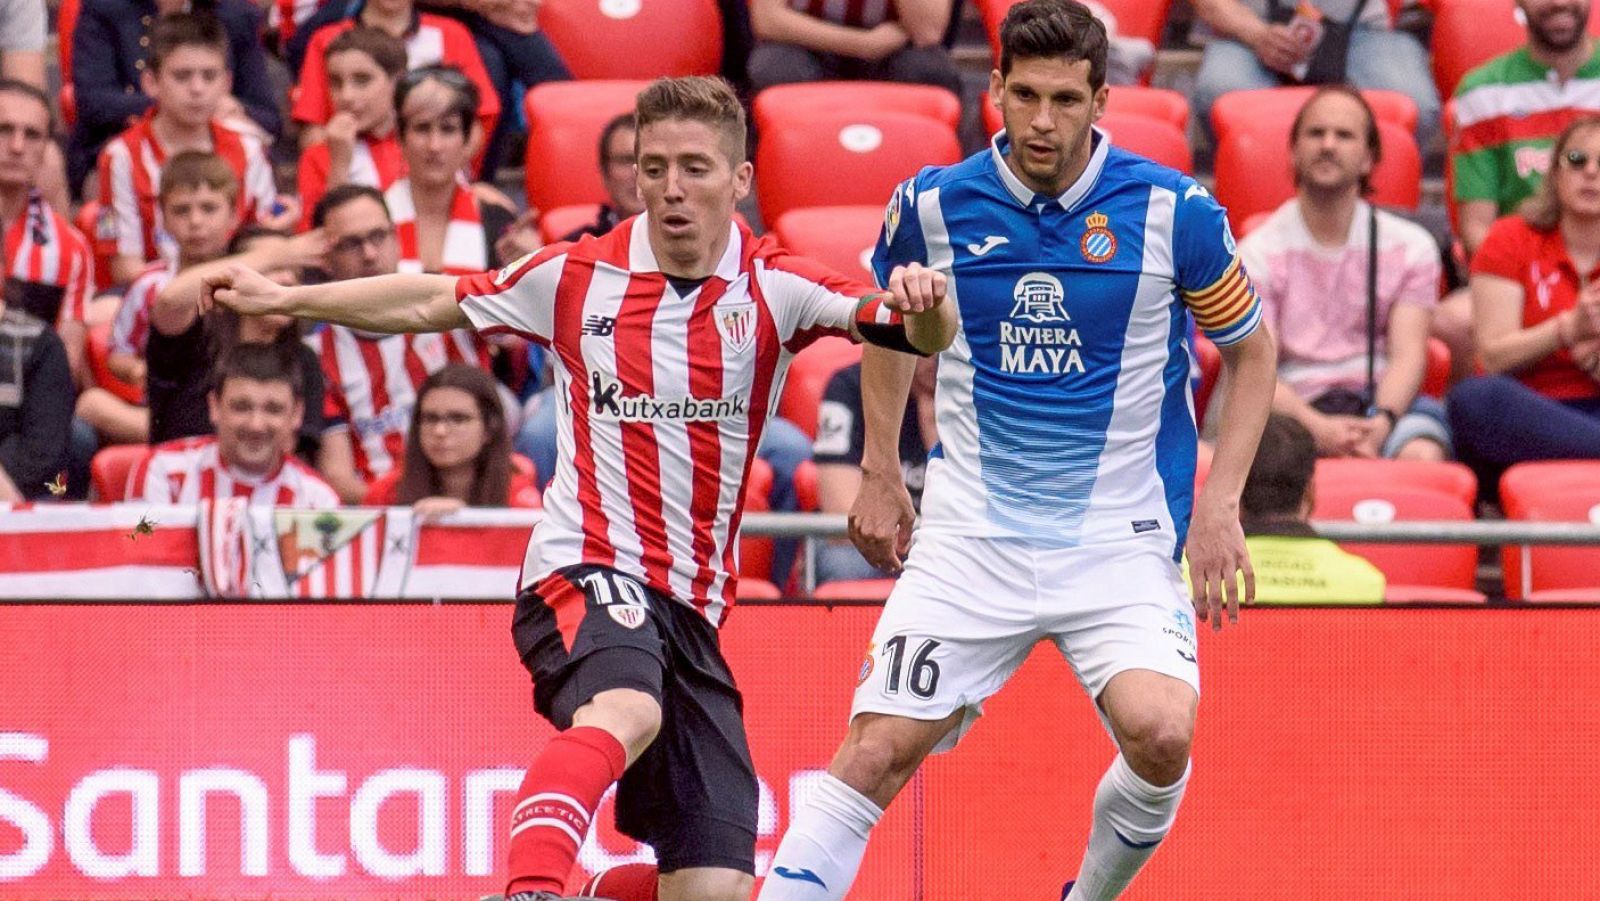 El delantero del Athletic de Bilbao, Iker Muniain (i), disputa un balón con el defensa del Espanyol, Javi López (d).